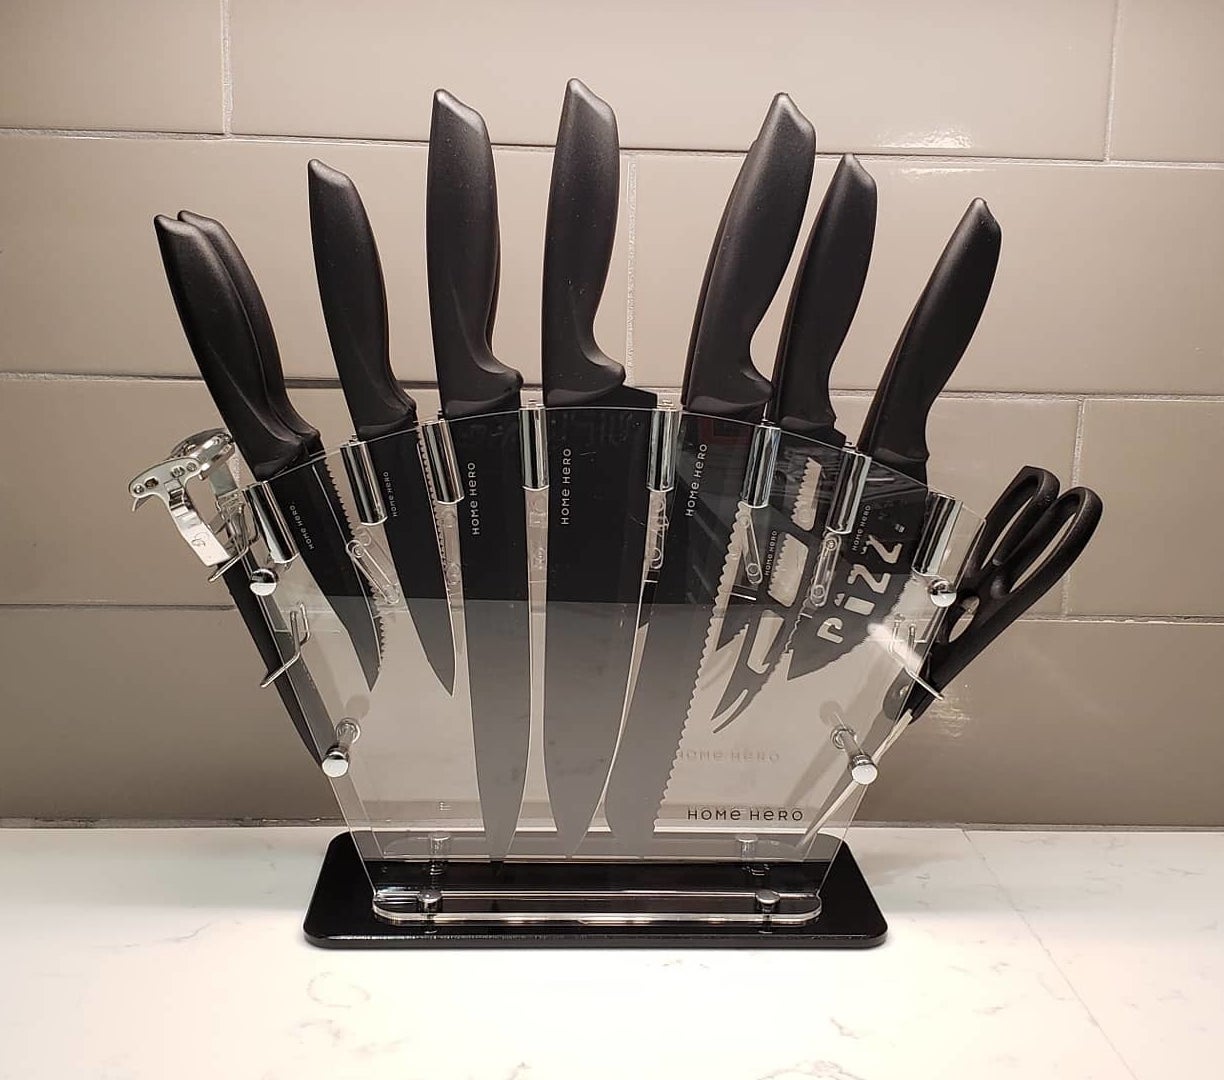 the set of black knives